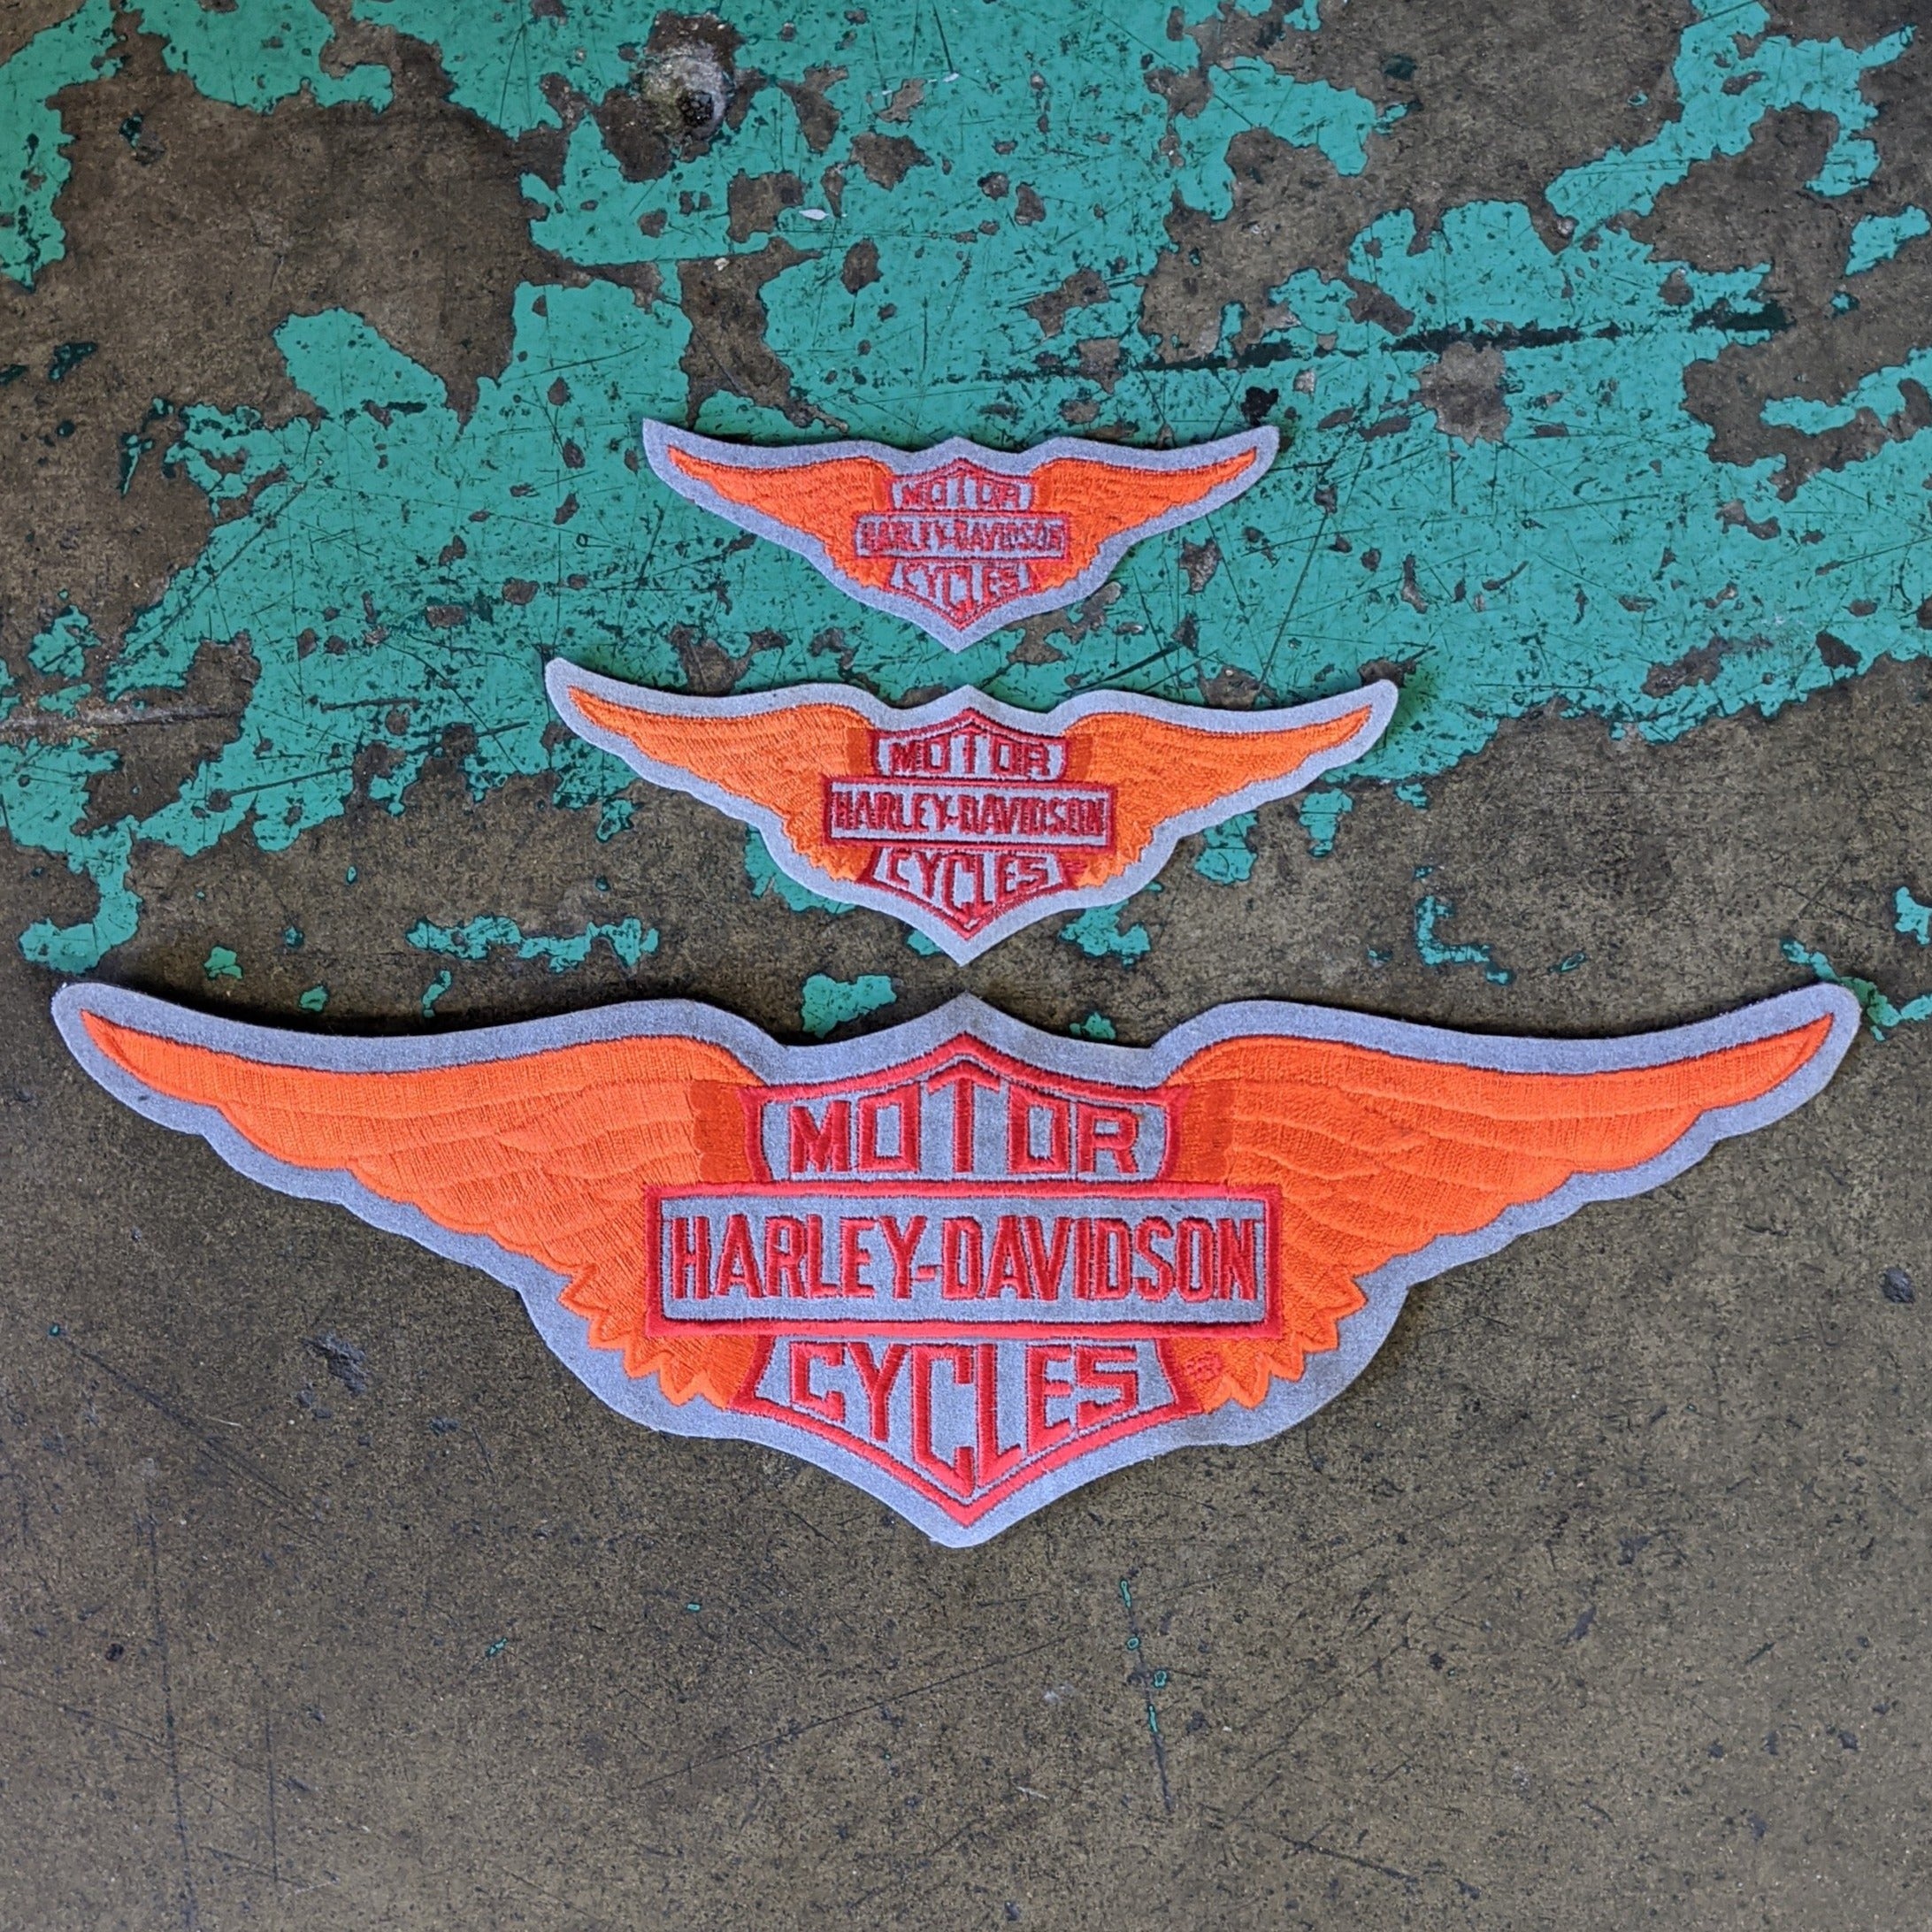 original harley davidson logo with wings